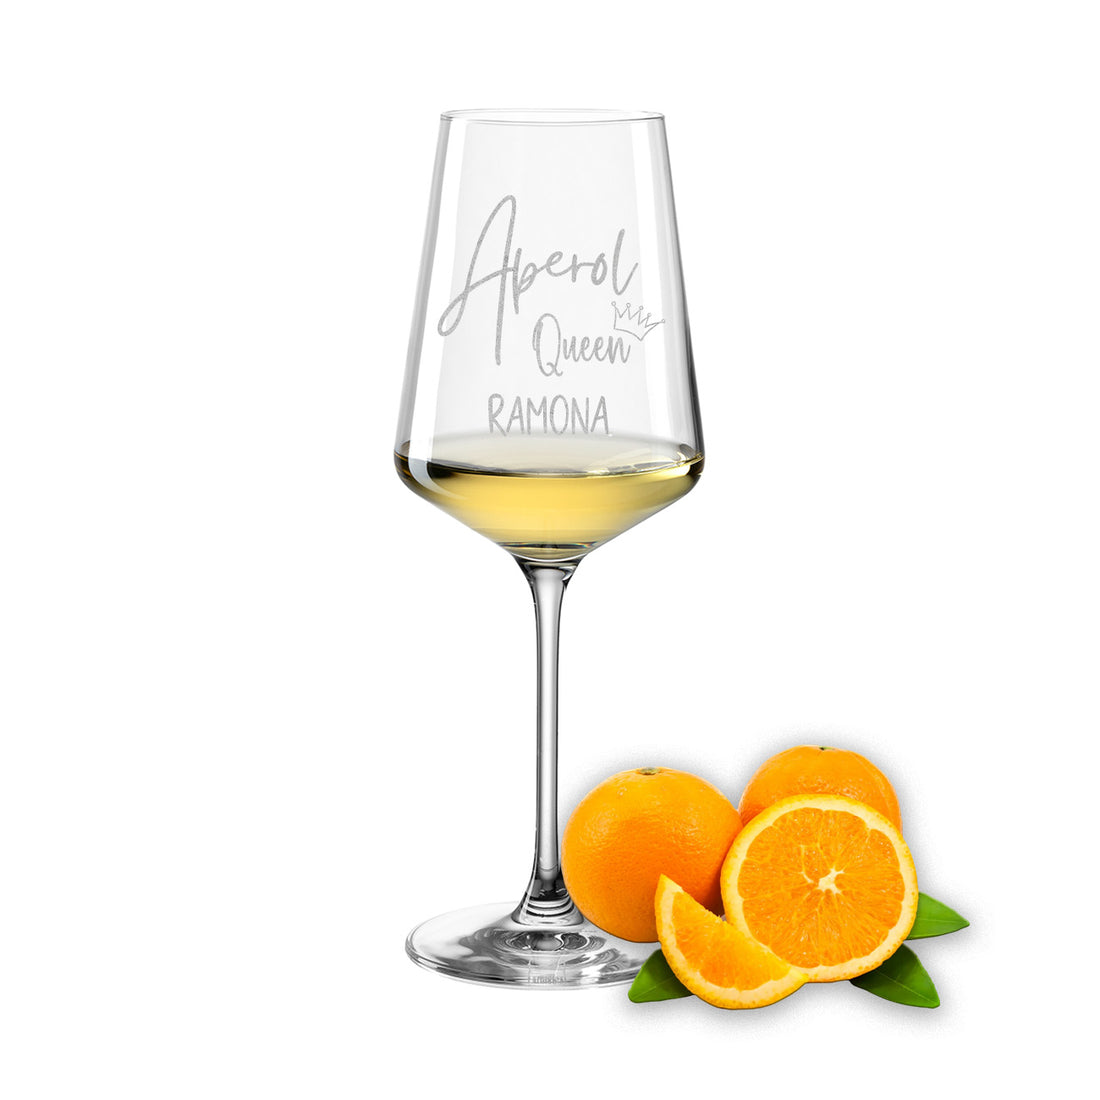 Weinglas mit Gravur Leonardo Puccini "APEROL QUEEN" mit Wunschname